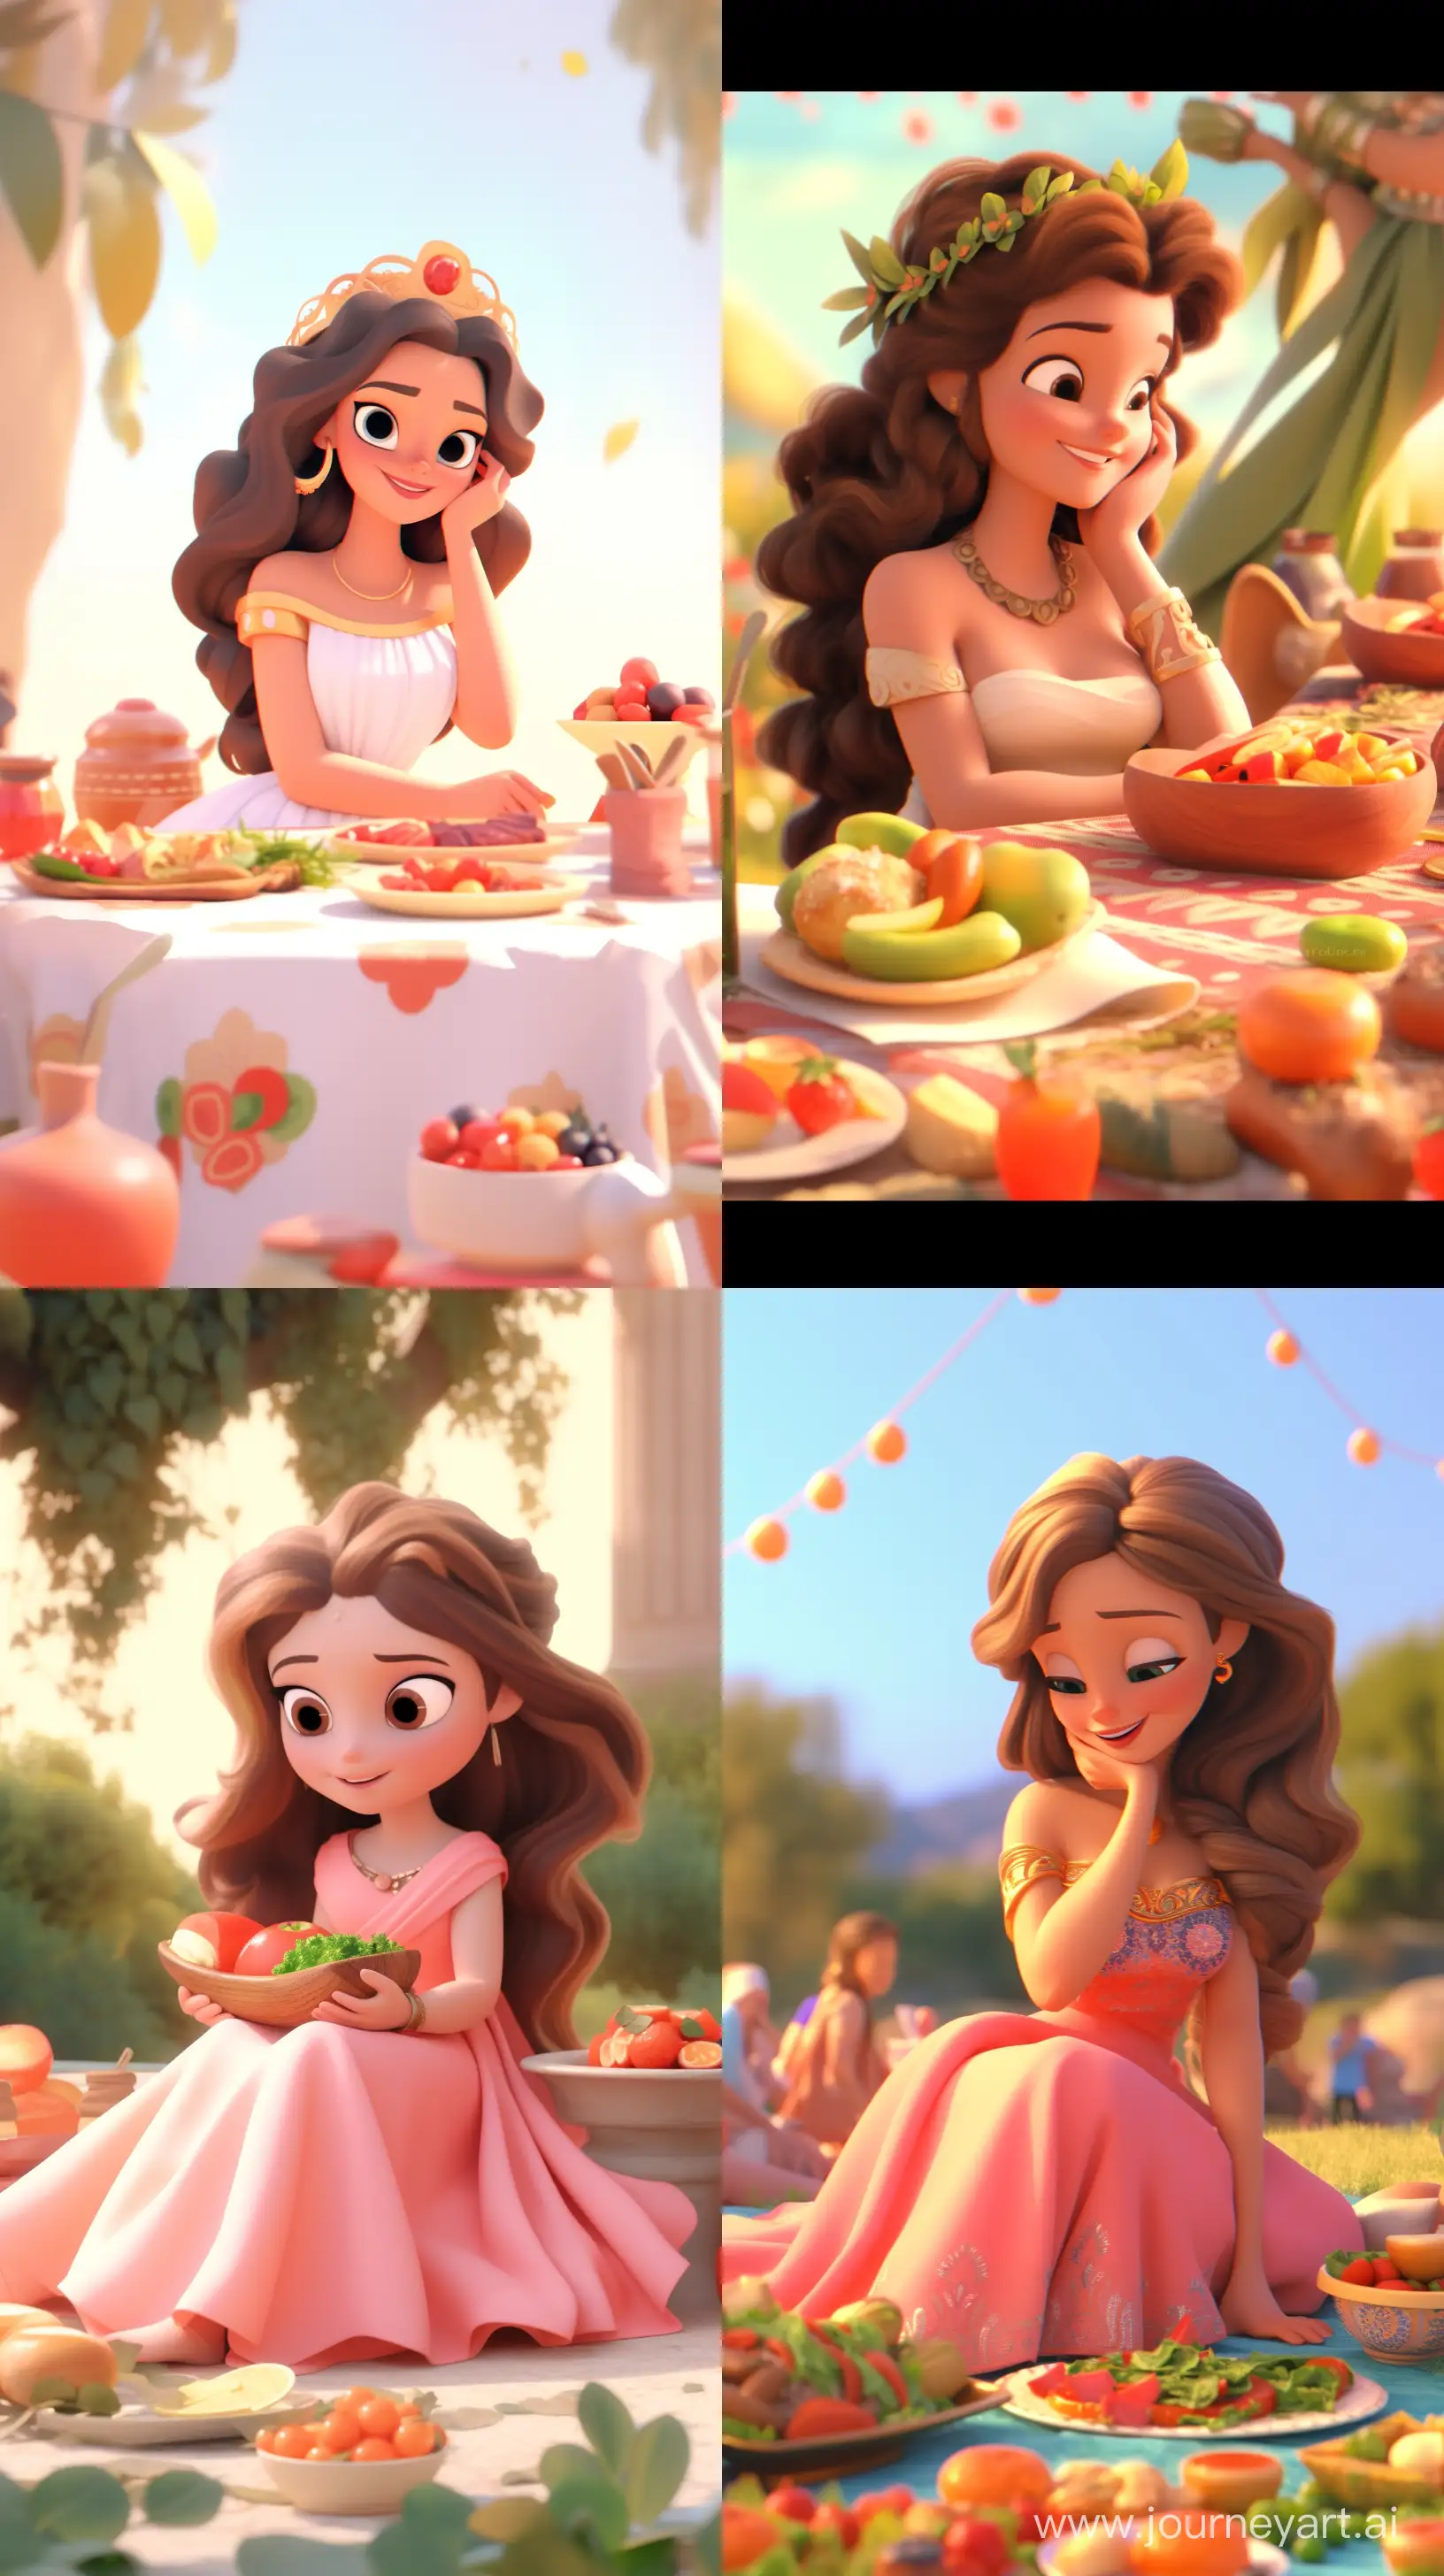 Greek-Goddess-Picnic-3D-Animation-in-Pixar-Style